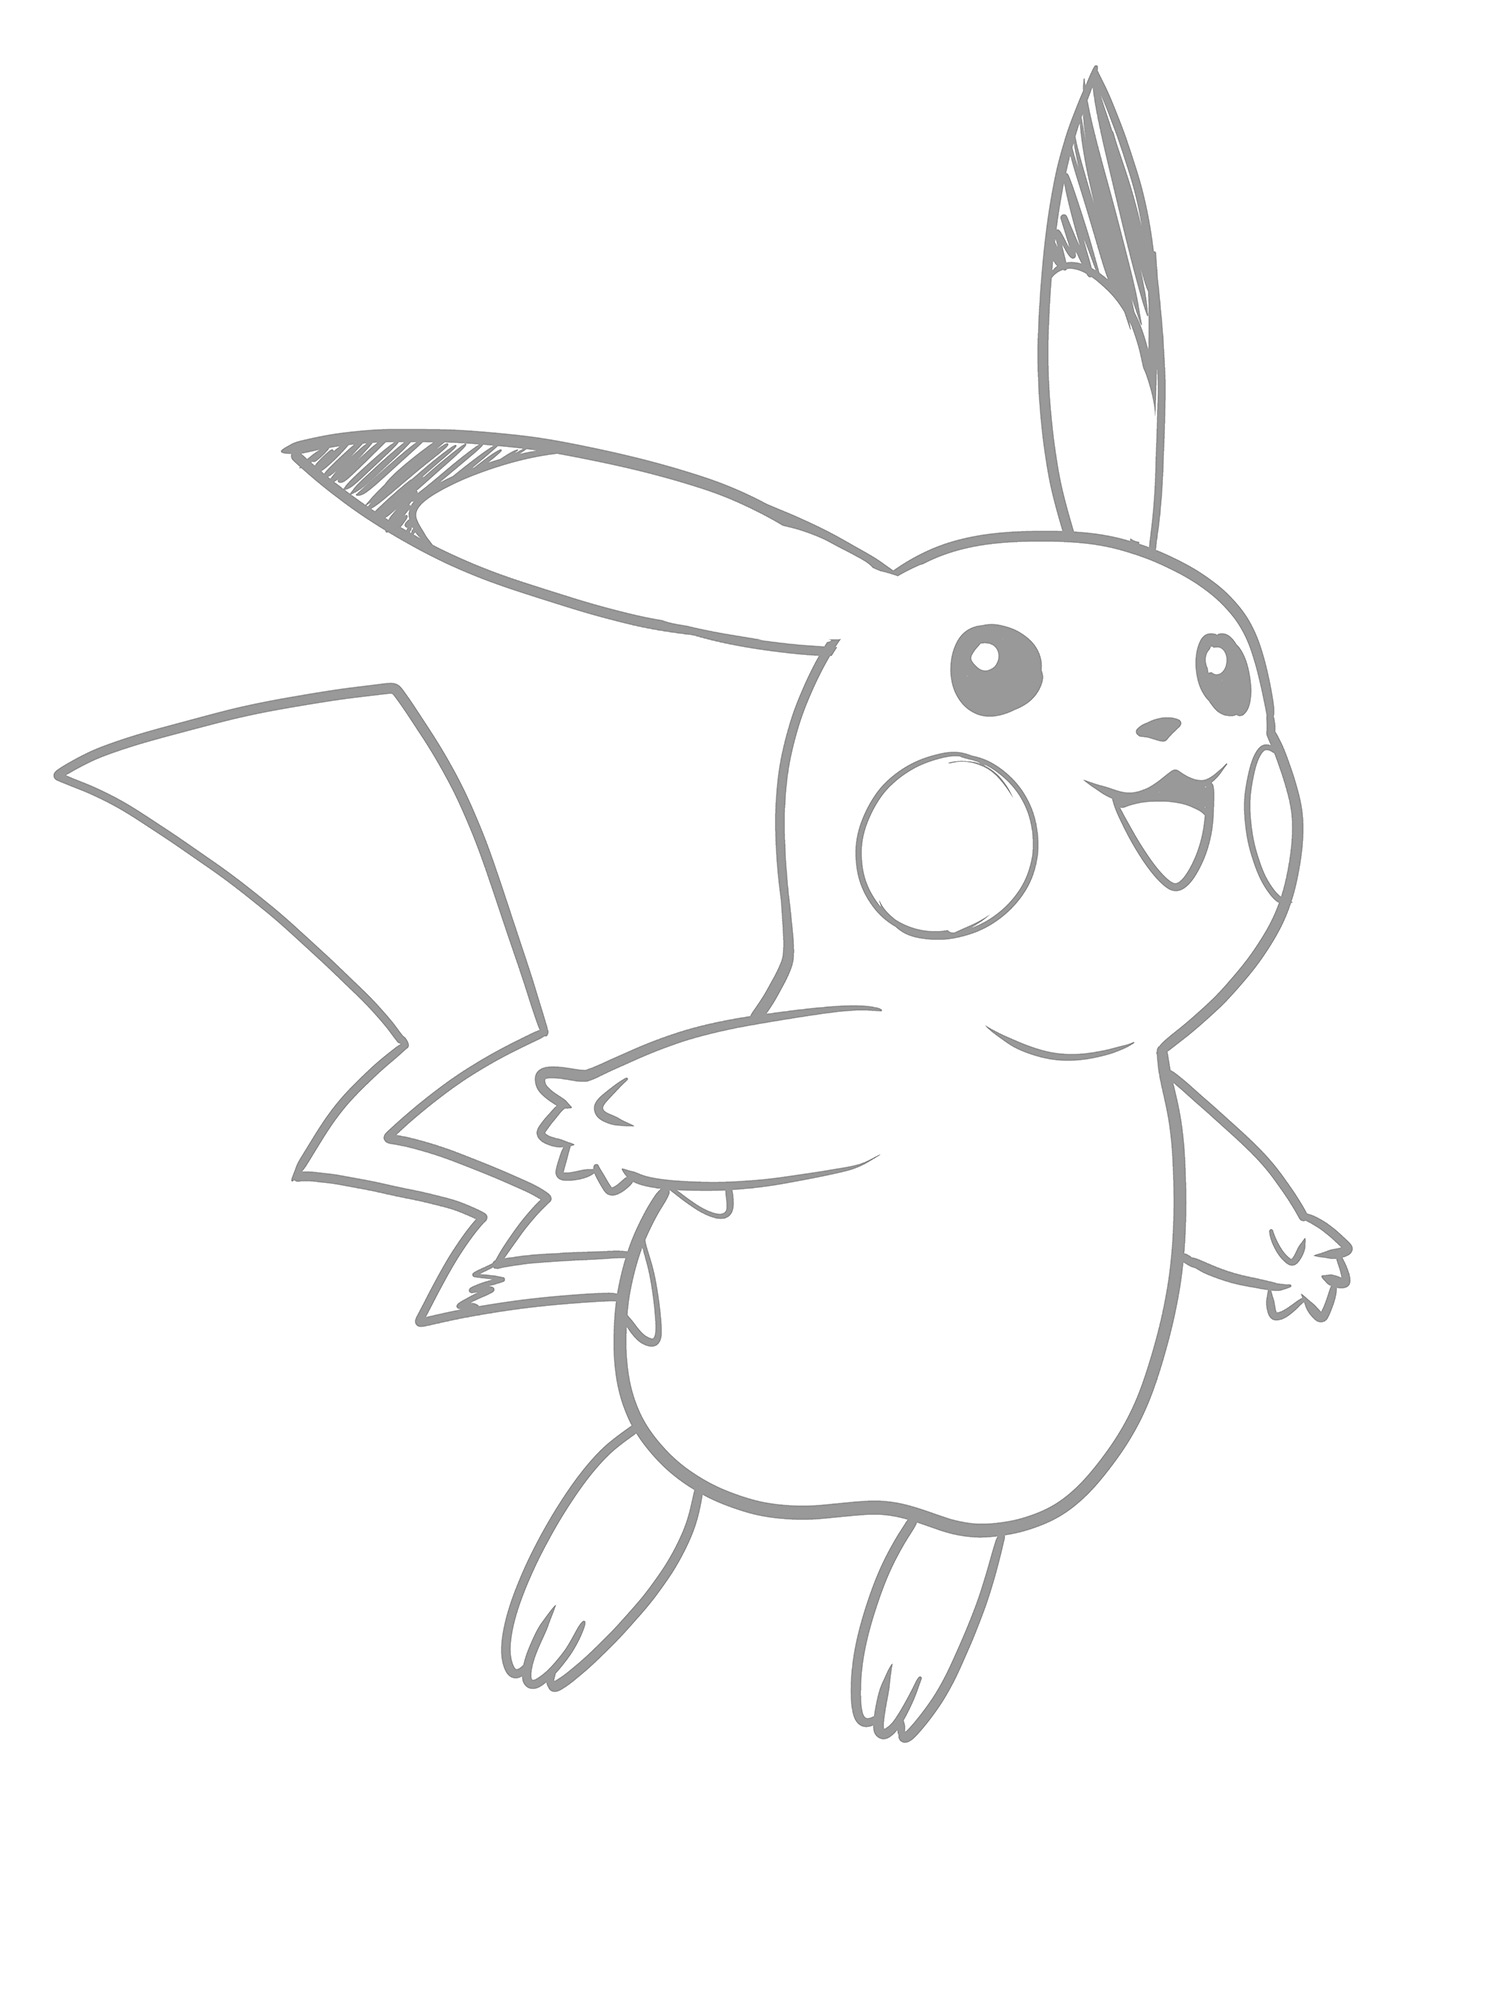 How To Draw Pikachu _ Pokémon - Easy Step By Step Tutorial - video  Dailymotion